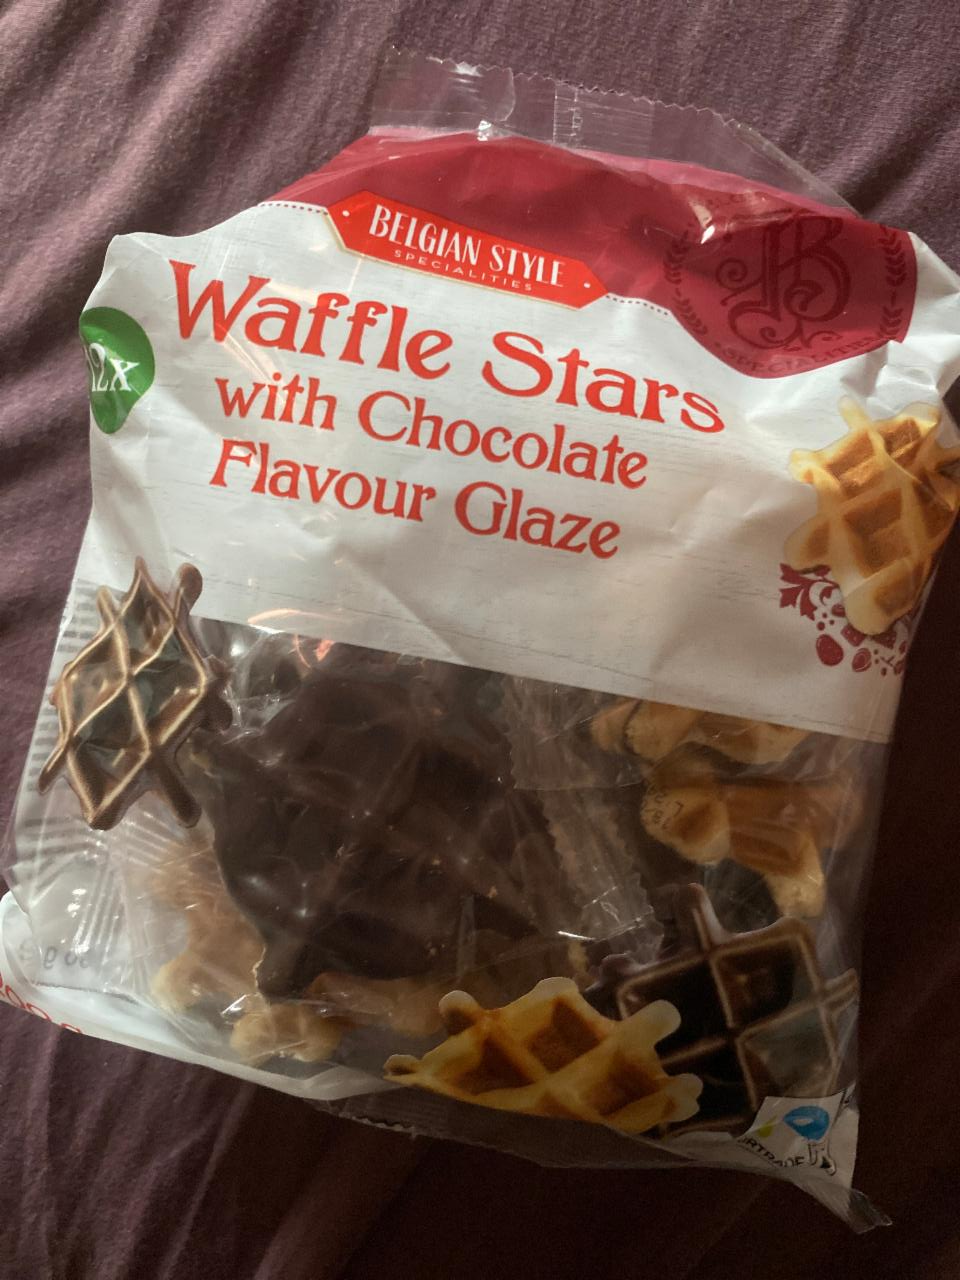 Fotografie - Waffle Stars with Chocolate Flavour Glaze Belgian Style